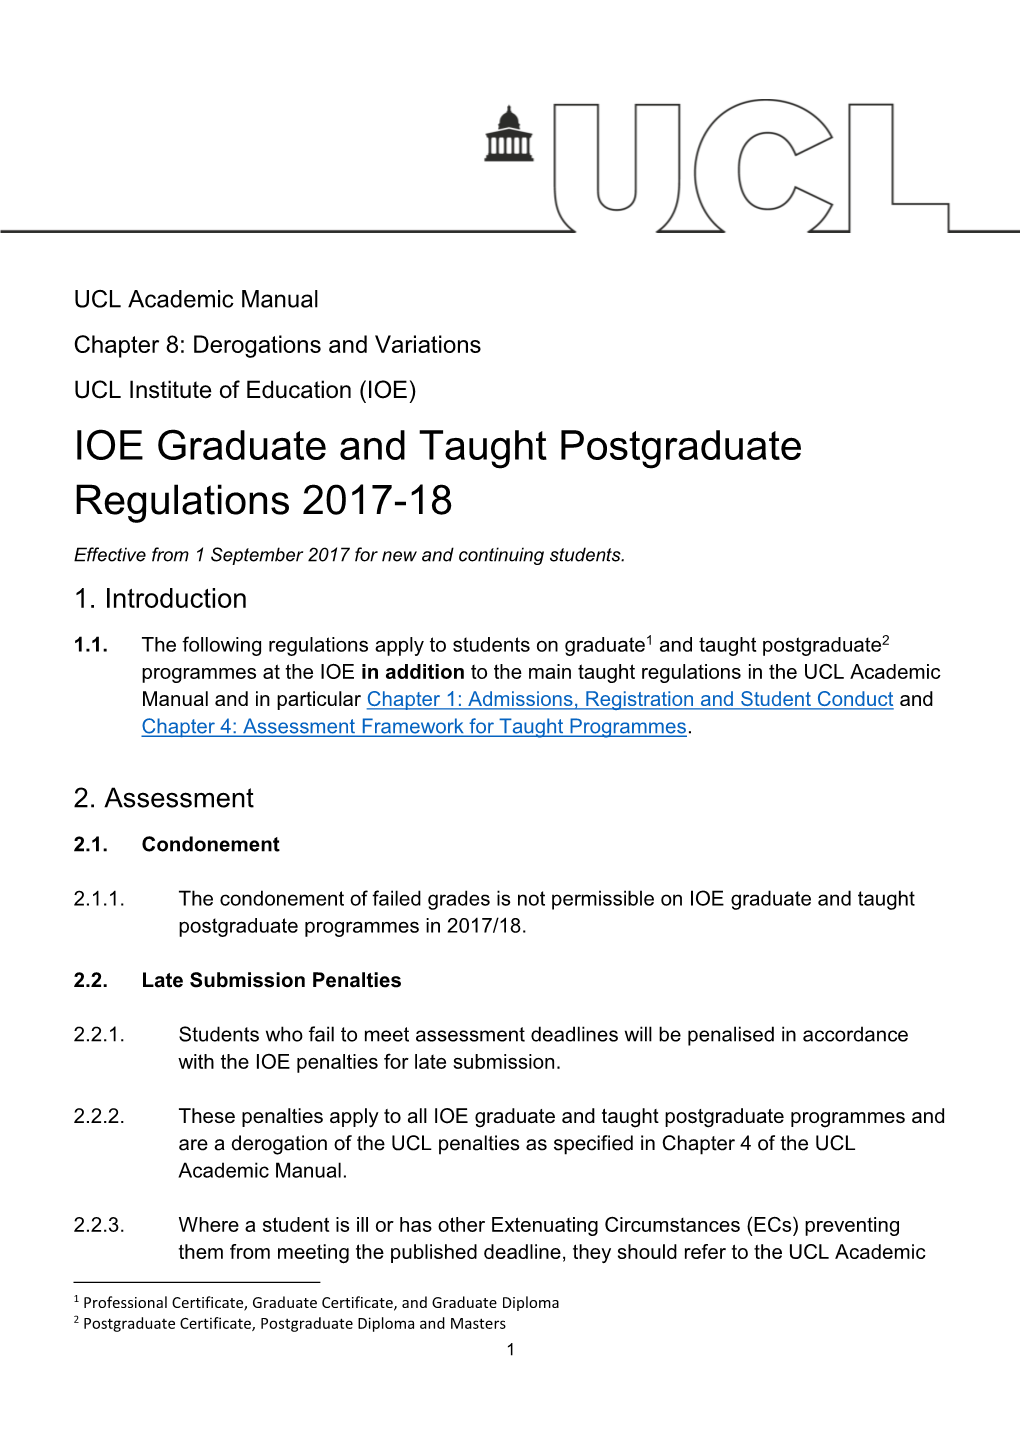 IOE Graduate and Taught Postgraduate Regulations 2017-18